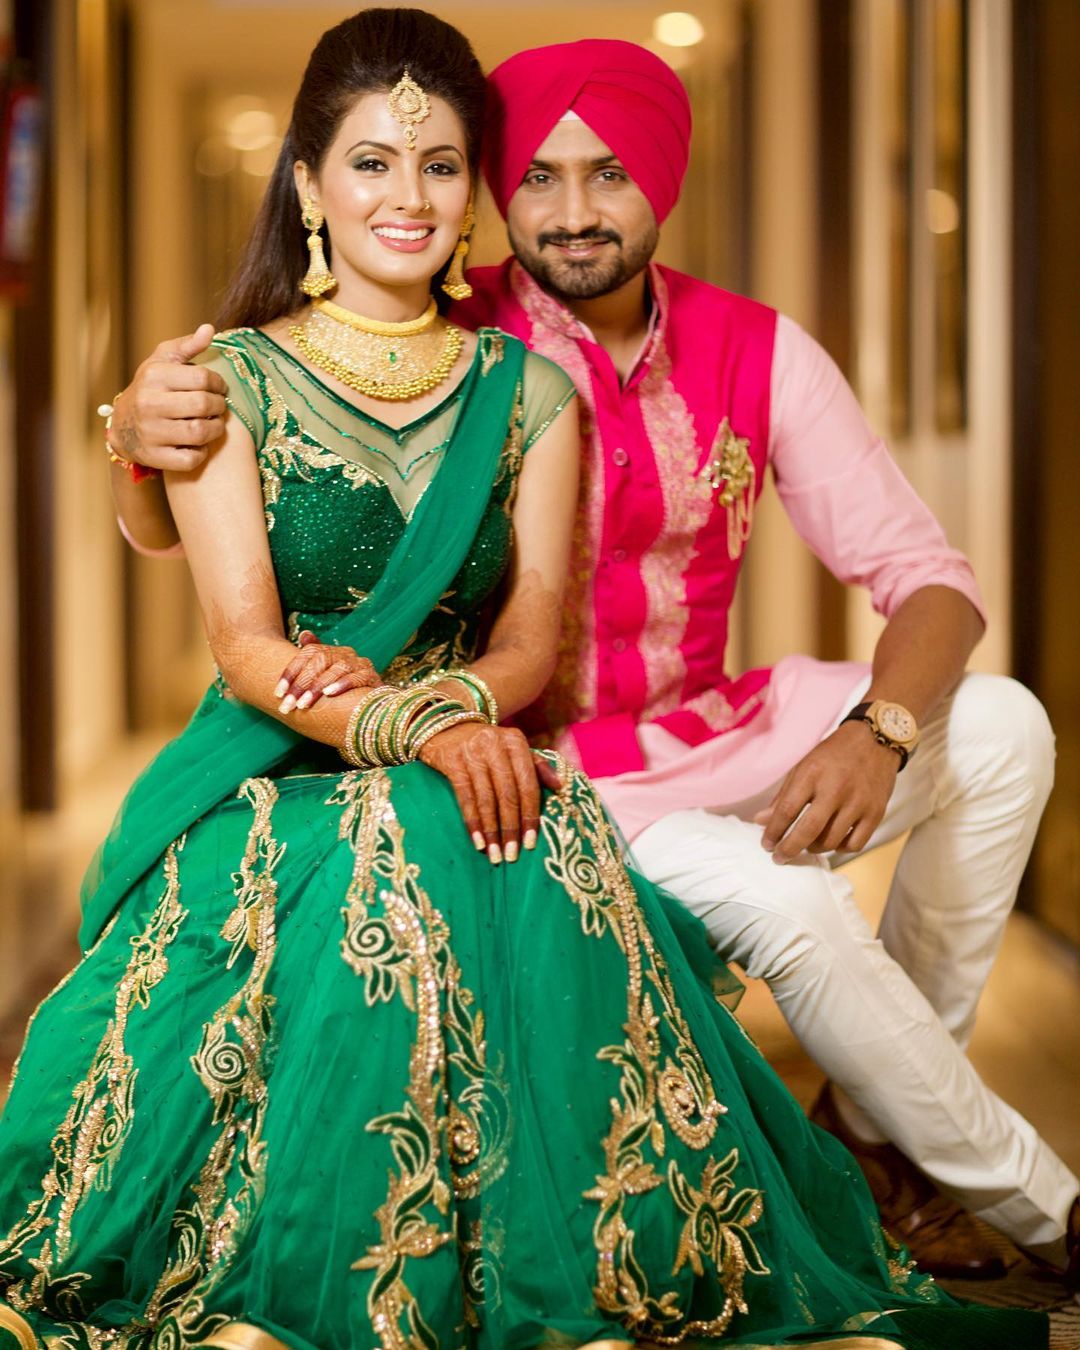 What Harbhajan Singh, Geeta Basra Selected as Their Wedding Outfits